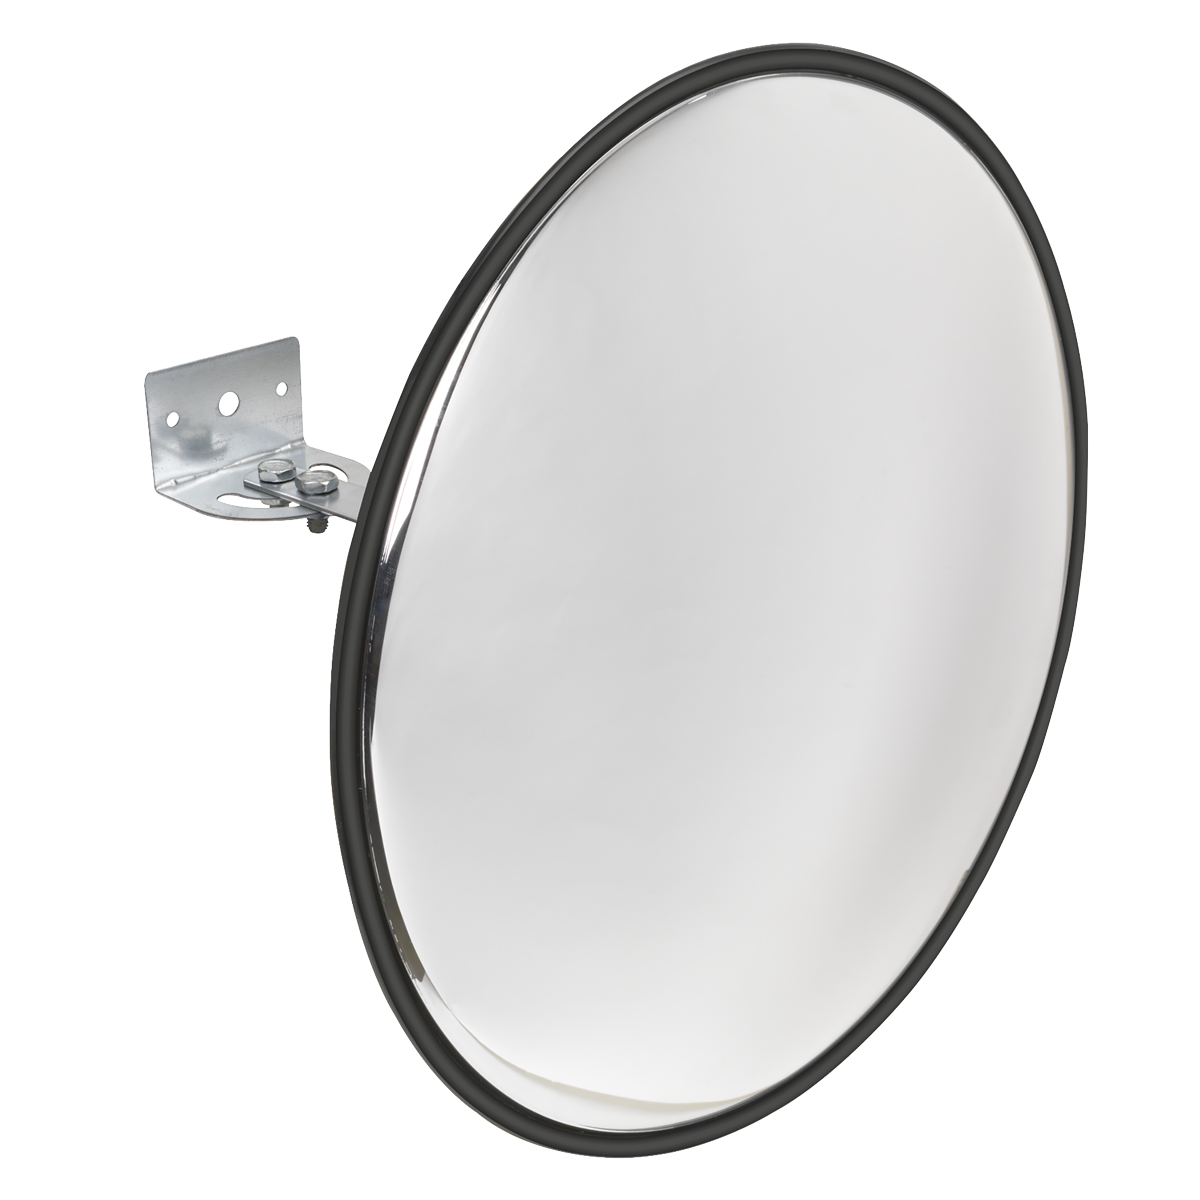 Sealey Convex Mirror Wall Mounting 450mm CM450